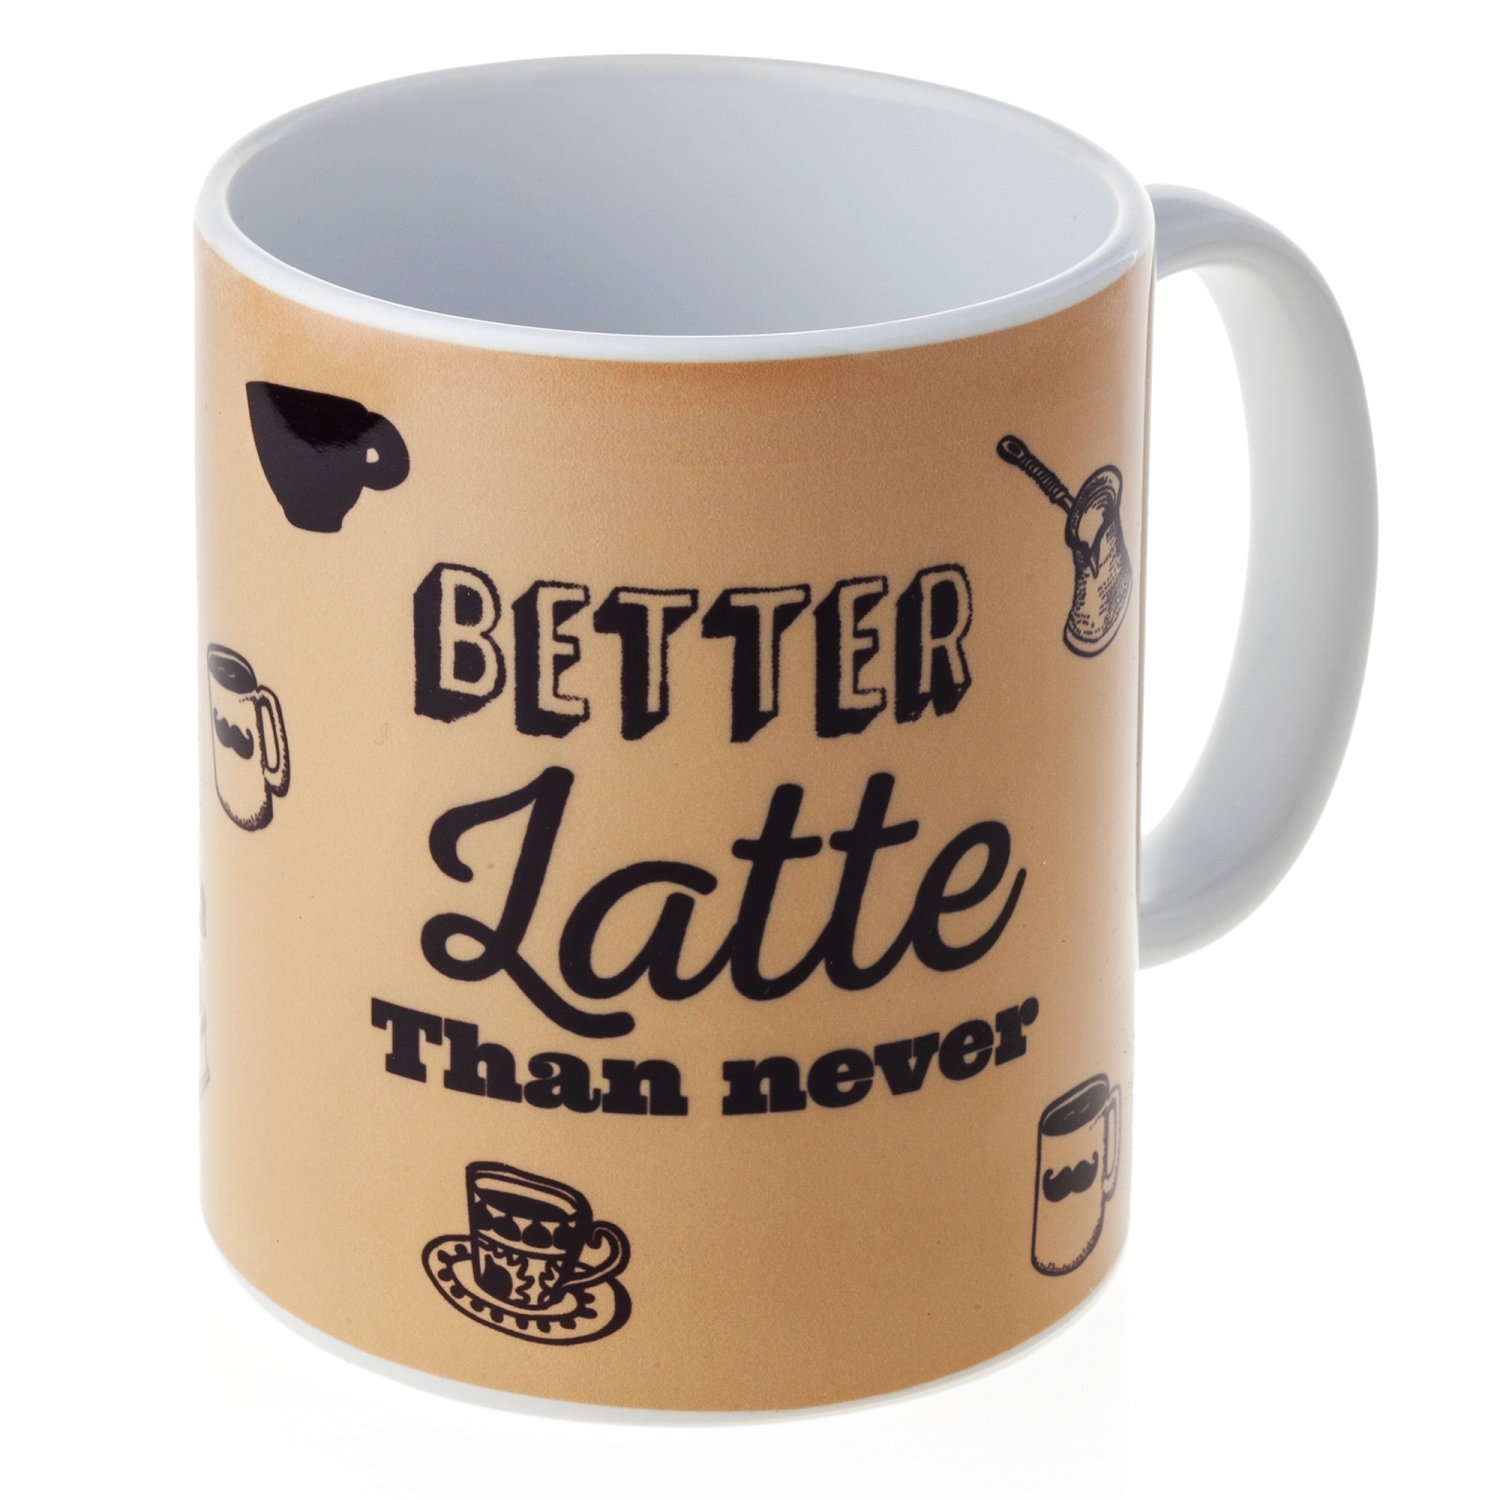 Barbara Shaw "Better Latte Than Never" Mug  - 1